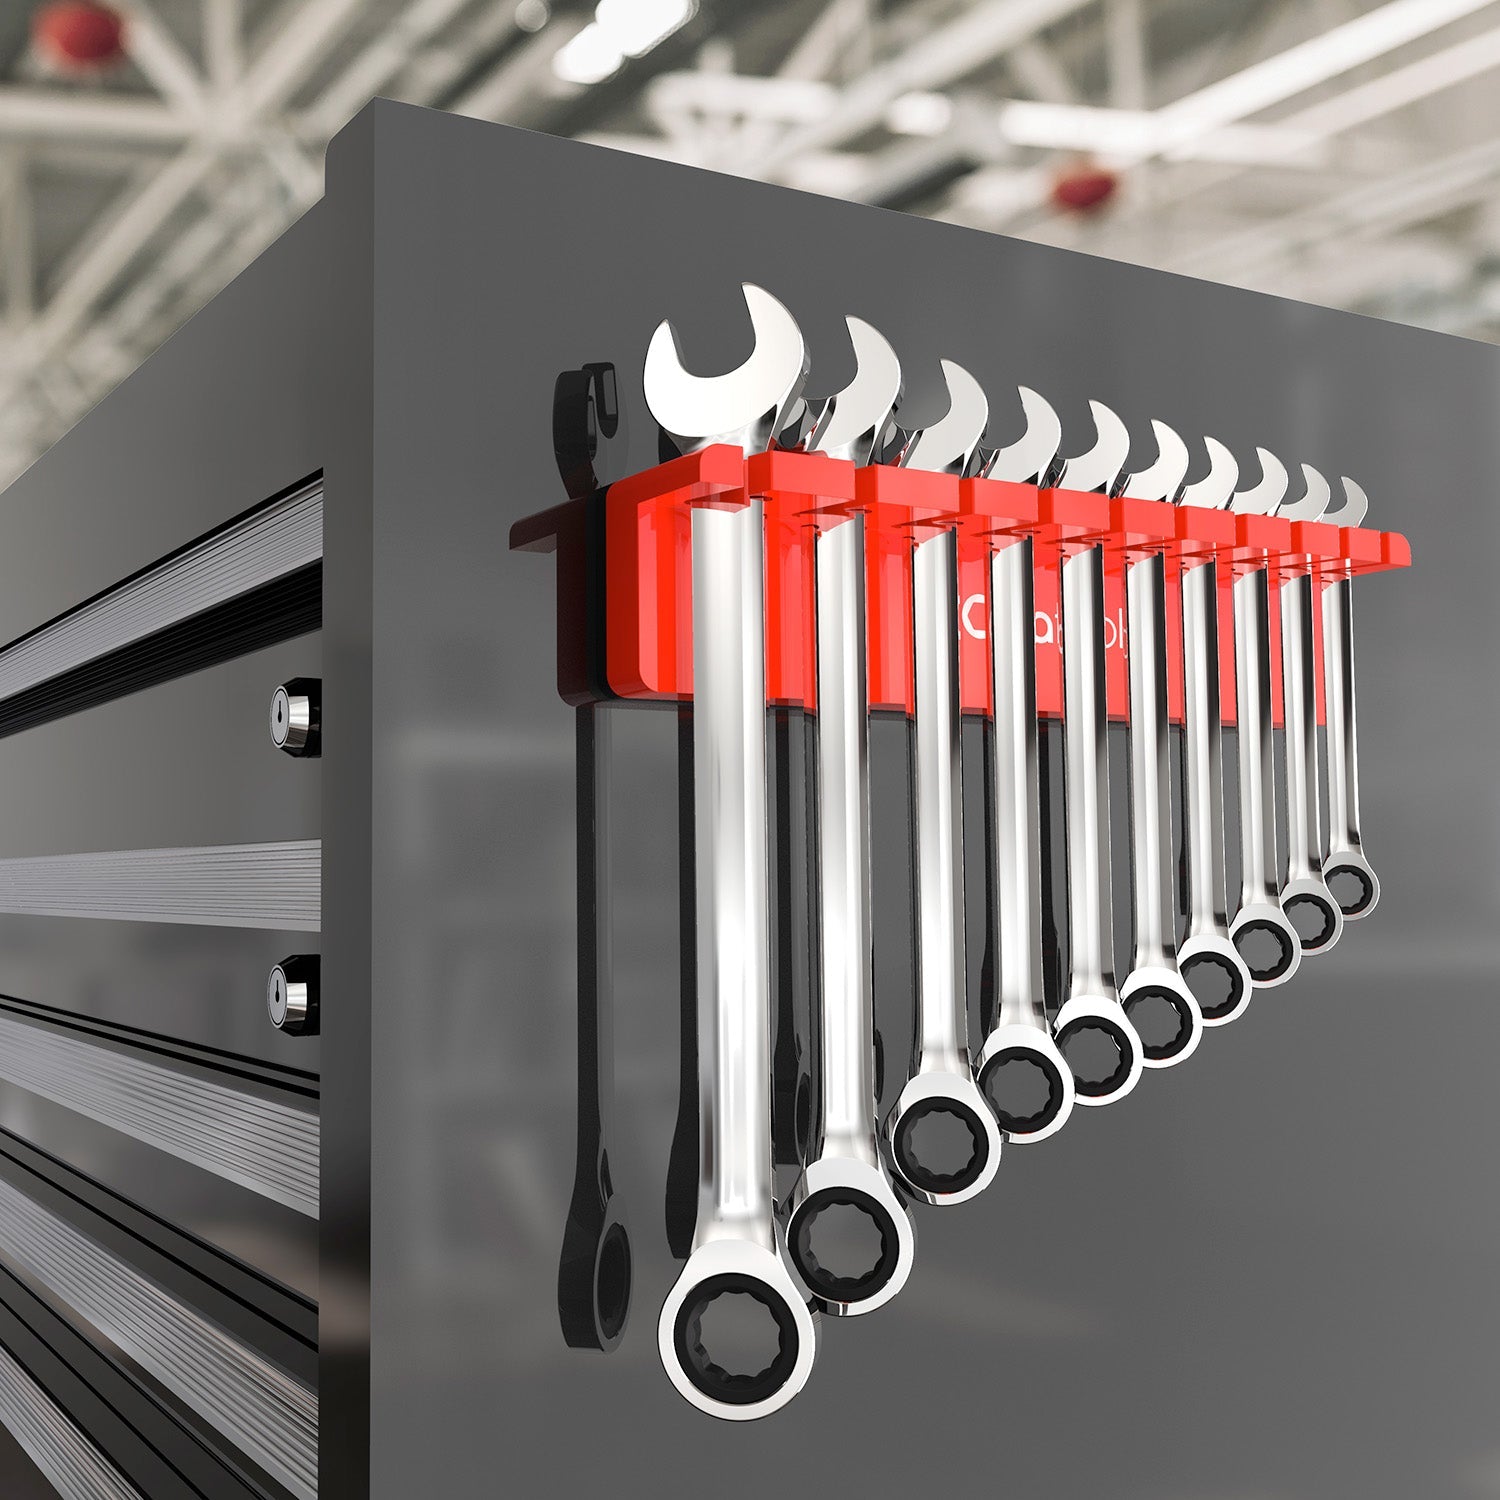 Wrench Organizer -   Wrench organizer, Tool box organization, Wrench  storage